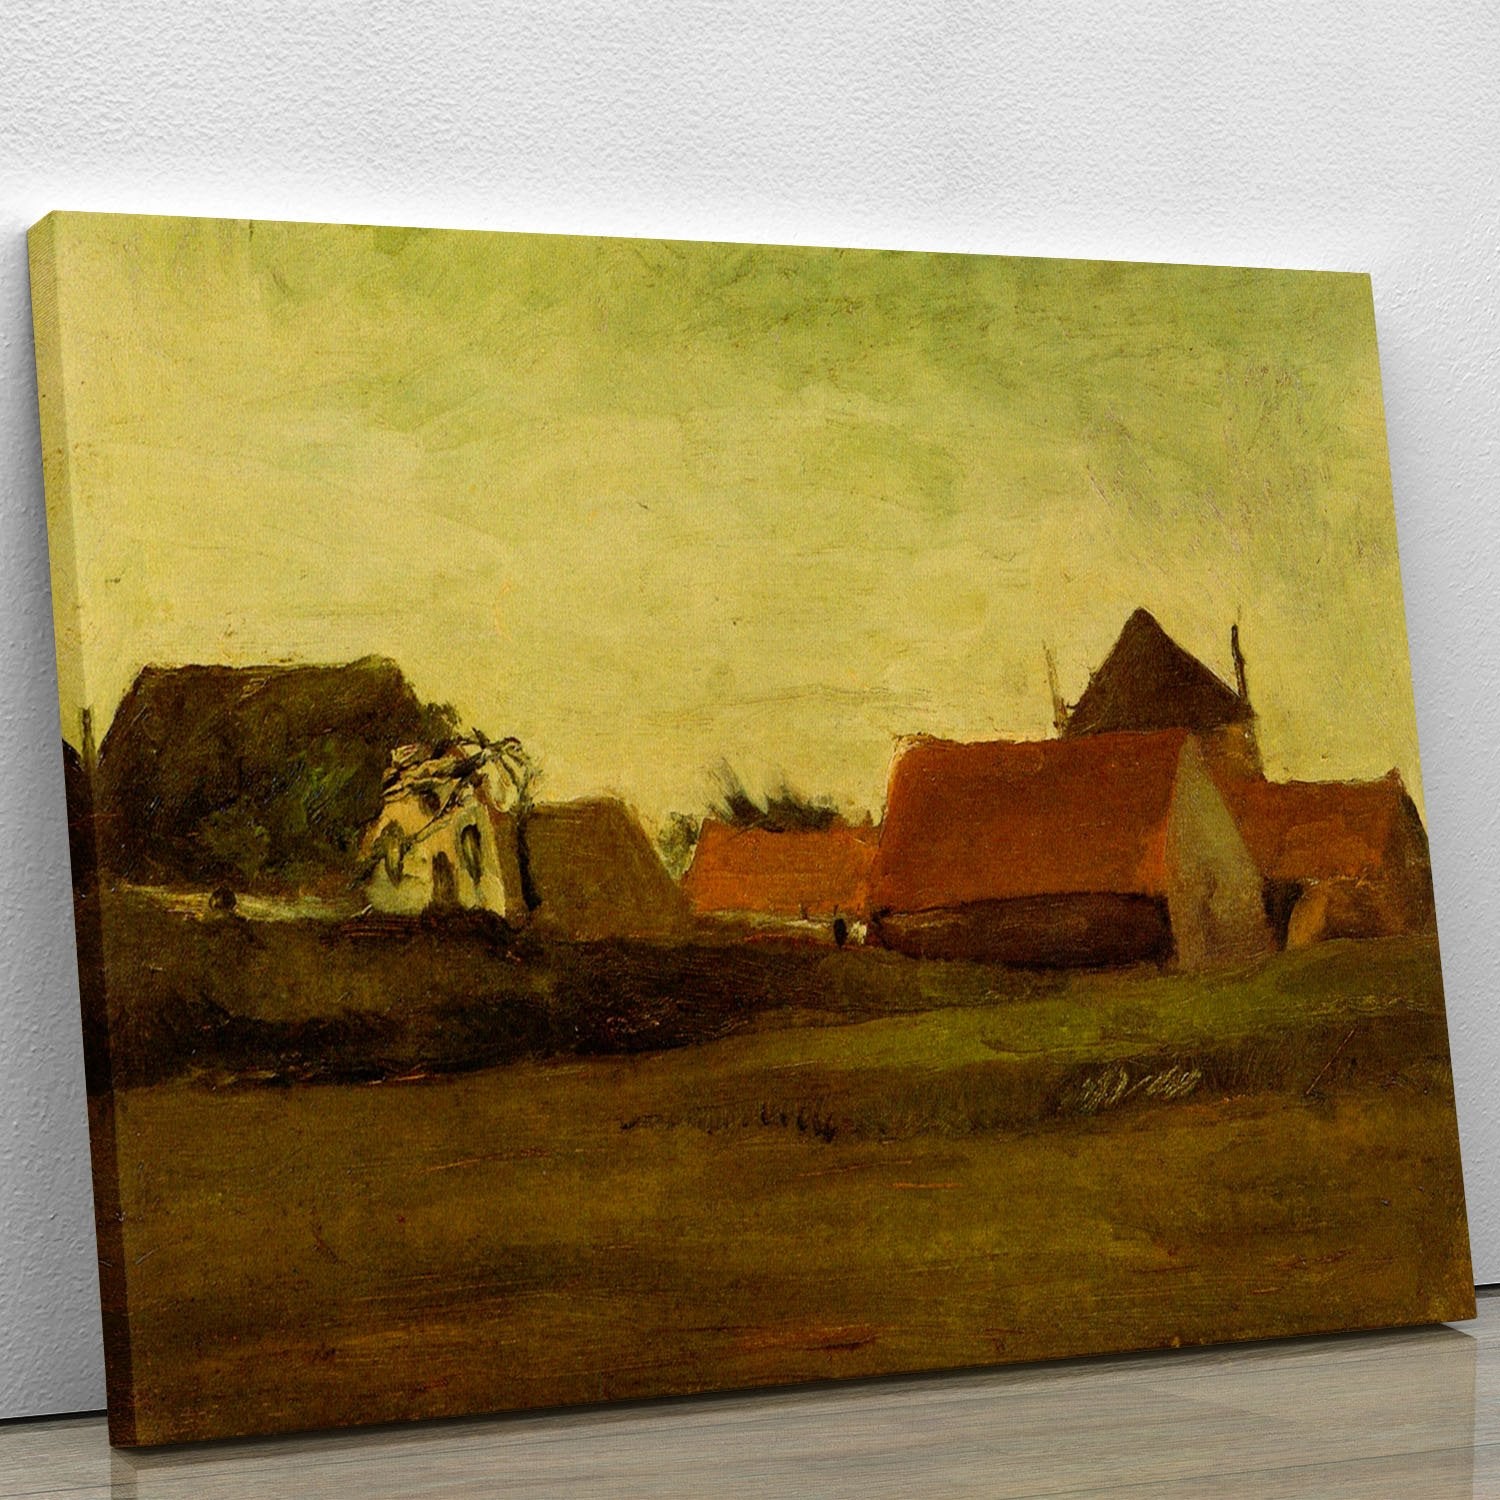 Farmhouses in Loosduinen near The Hague at Twilight by Van Gogh Canvas Print or Poster